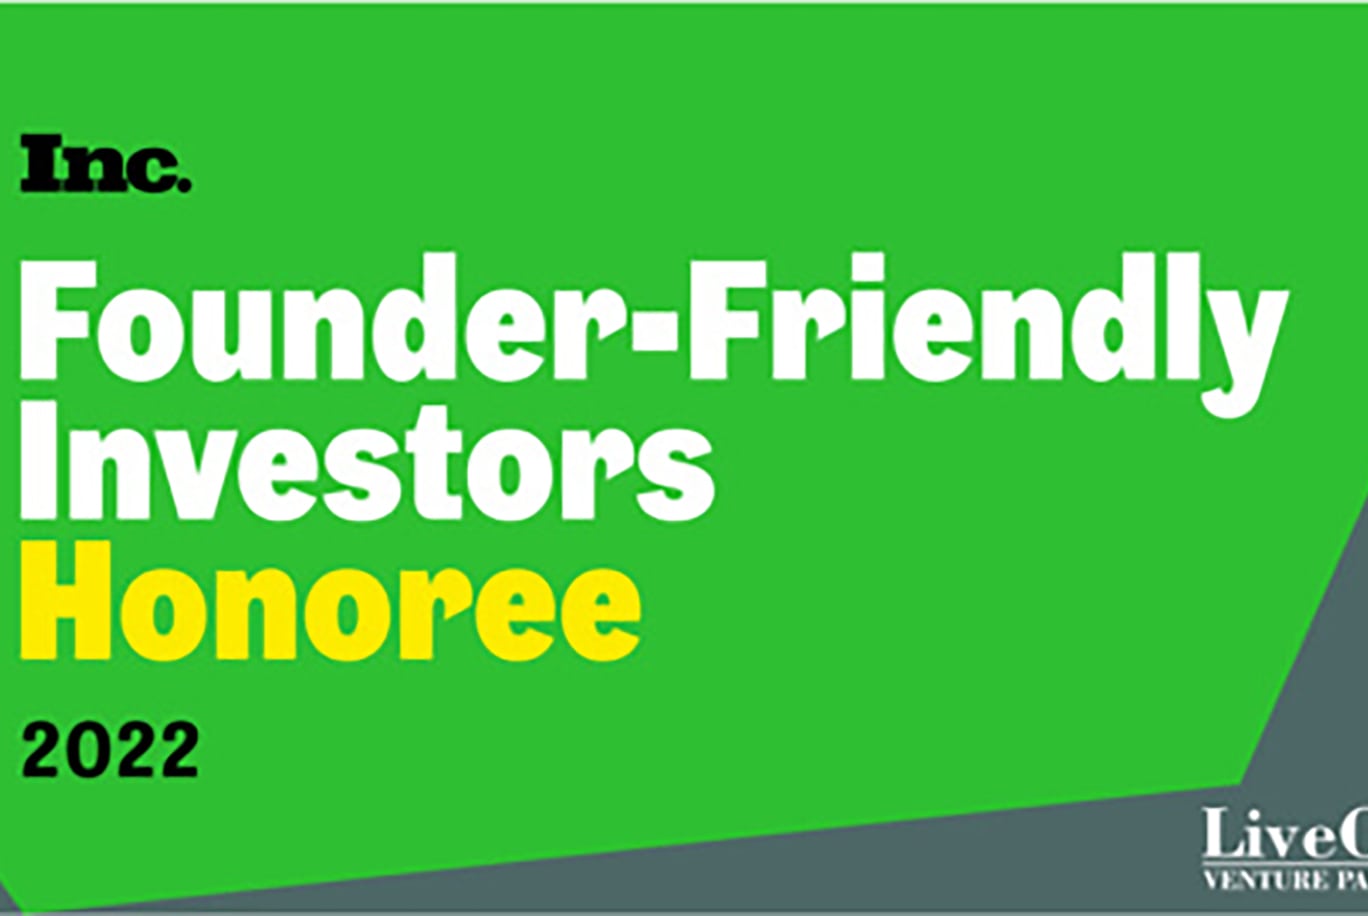 LiveOak Venture Partners Named to Inc.’s 2022 List of Founder-Friendly Investors